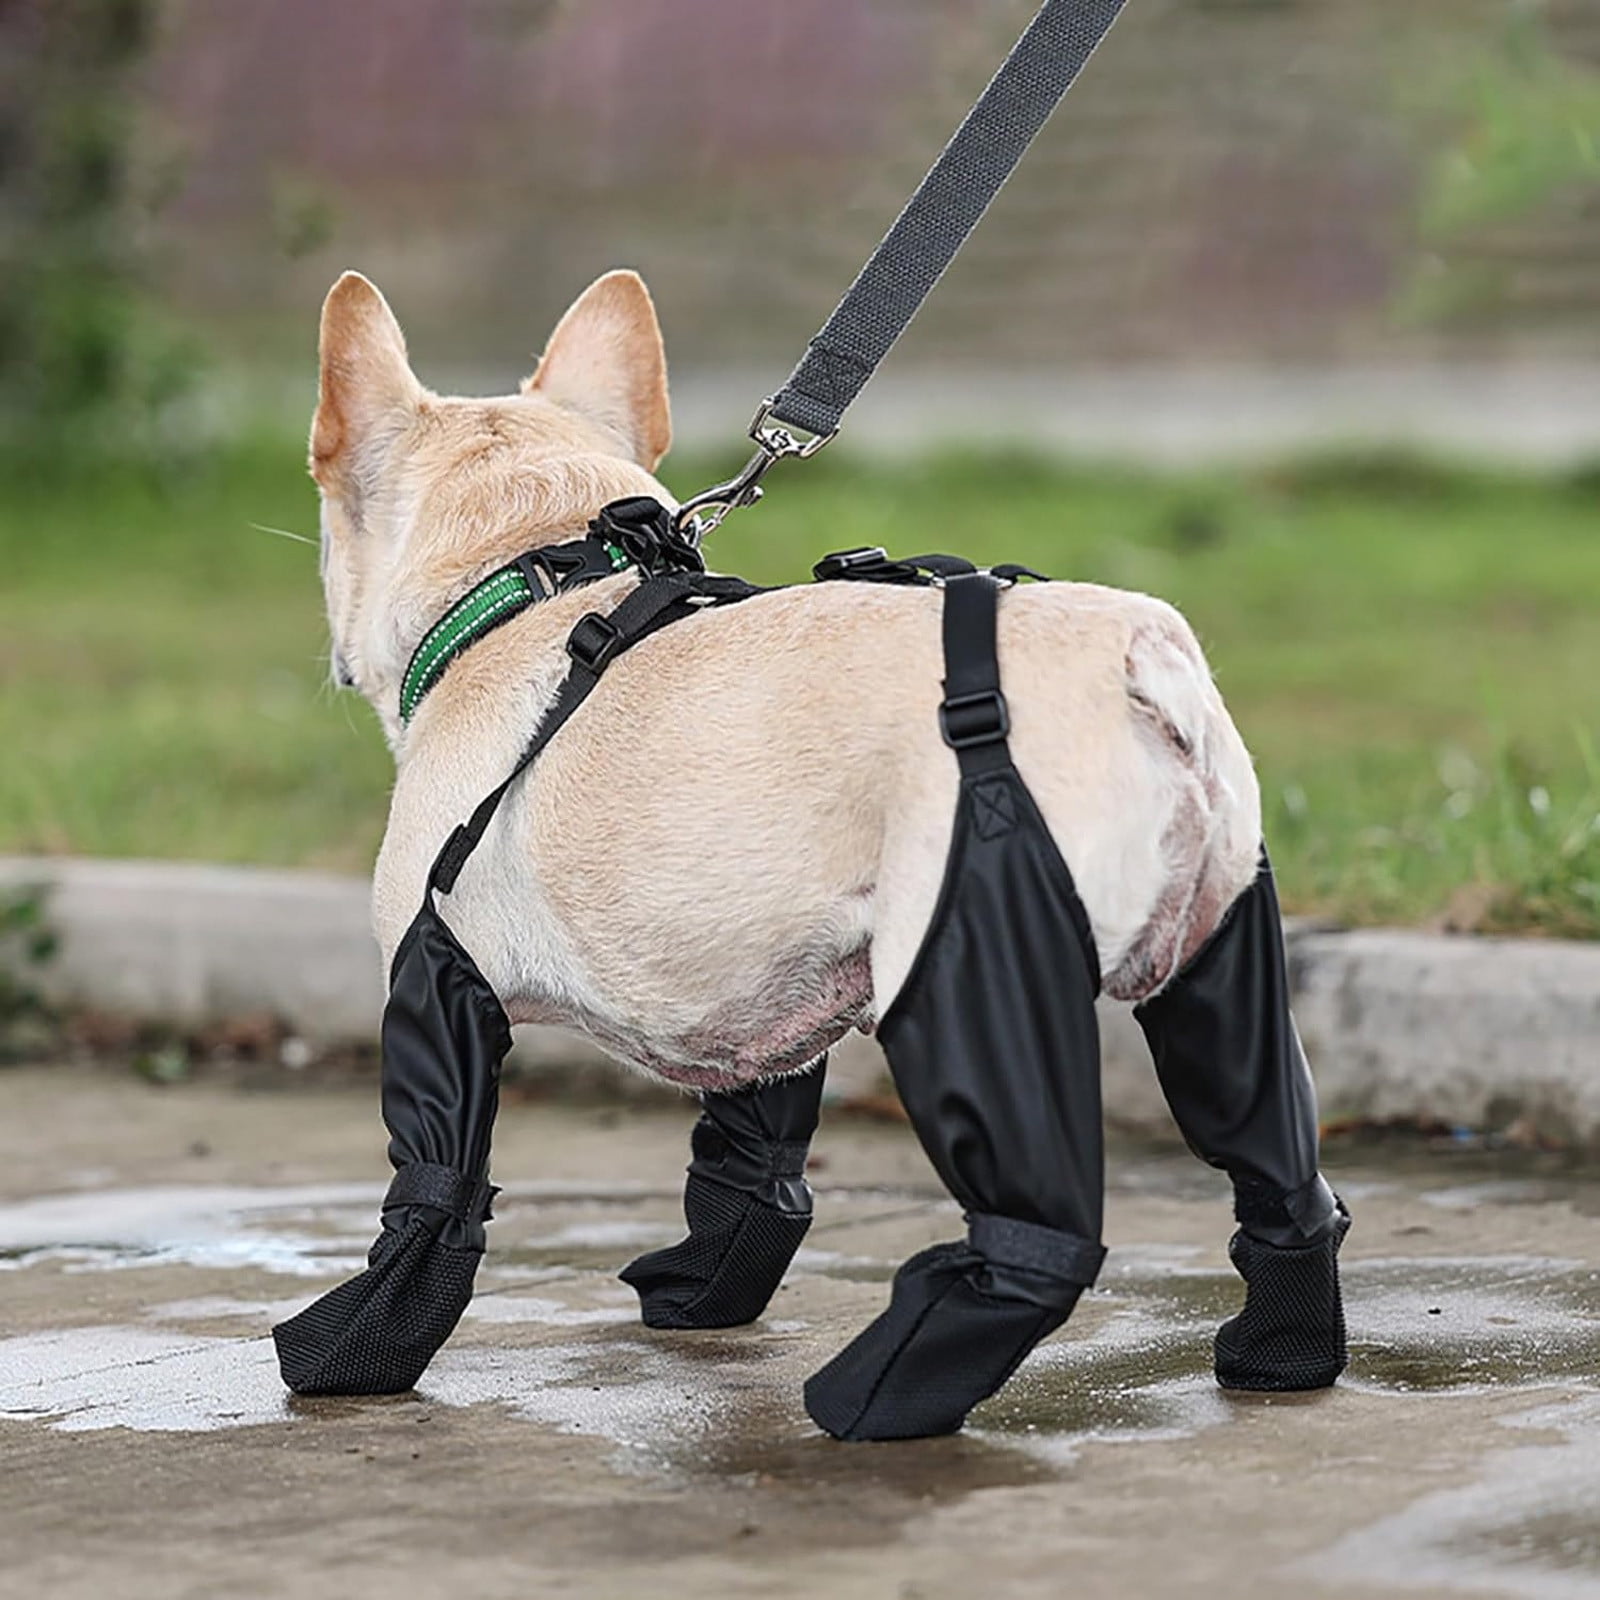 Walkee Paws - The Better Dog Boot! Indoor & Outdoor Dog Leggings